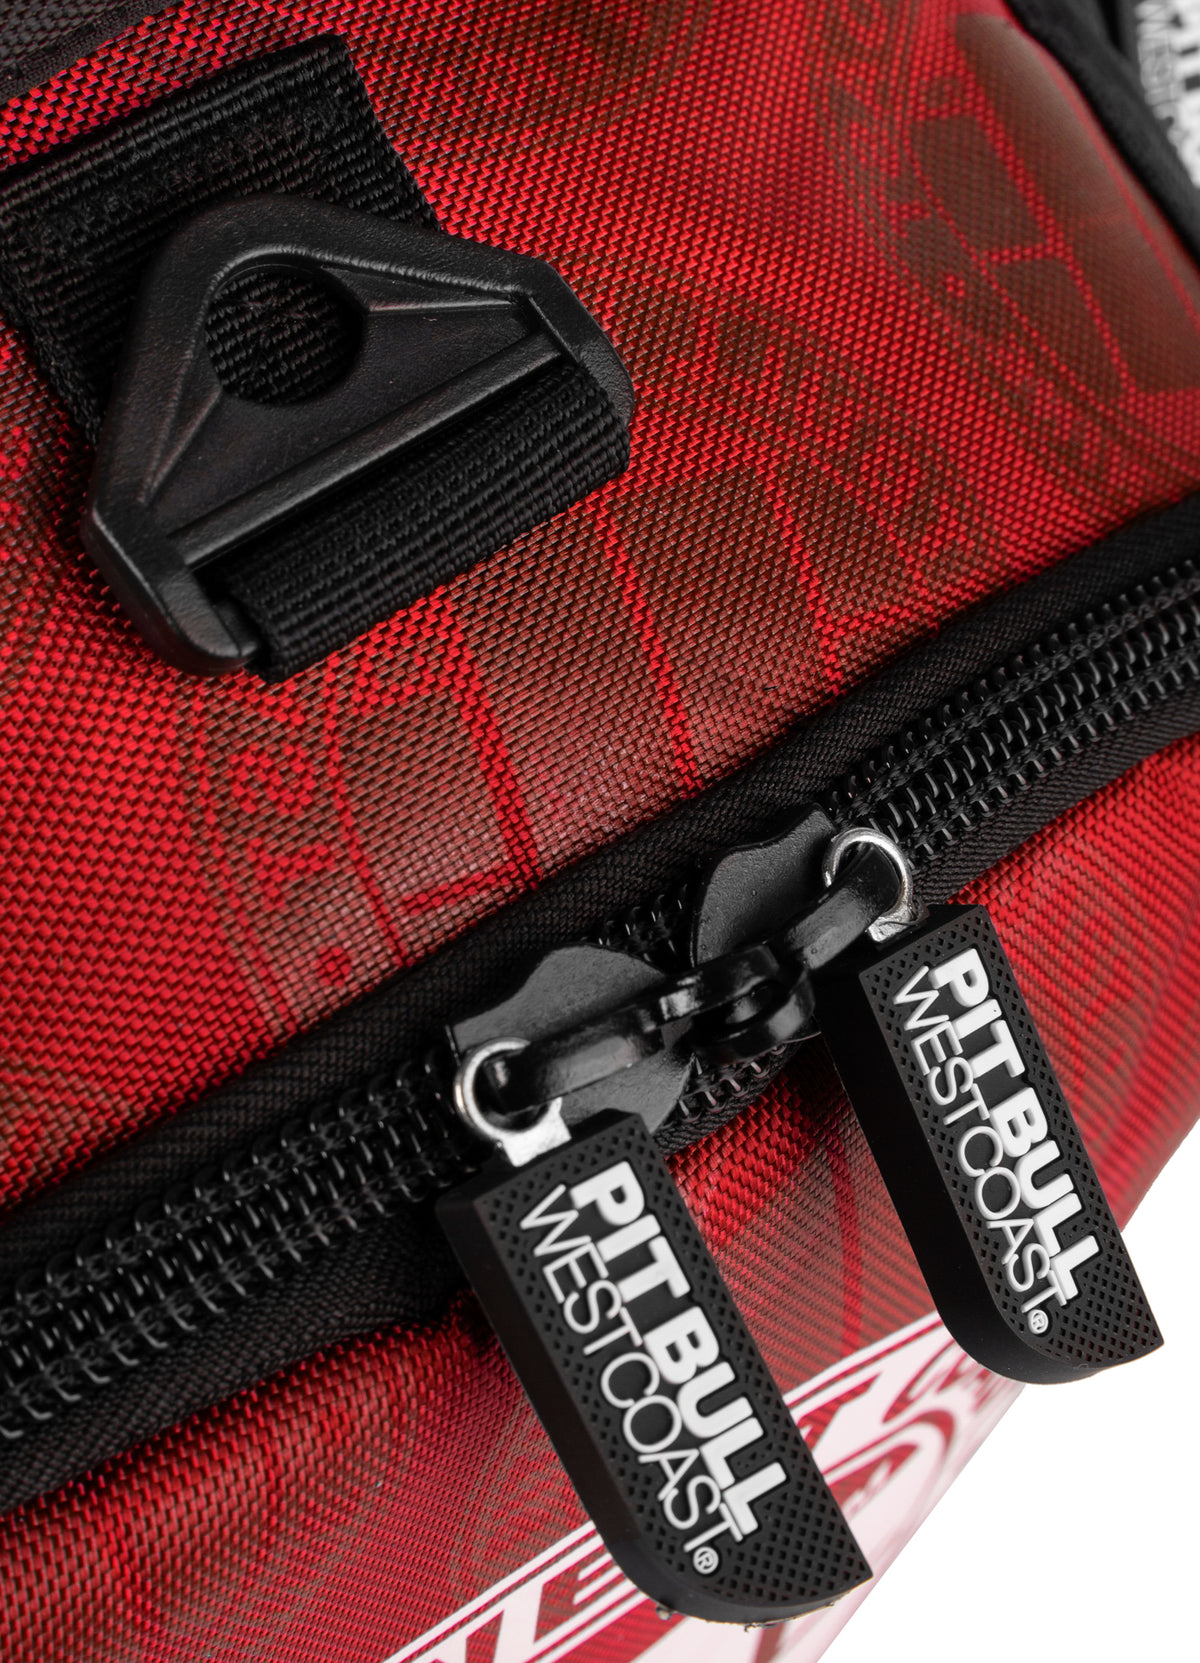 LOGO Red Medium Training Backpack - Pitbullstore.eu